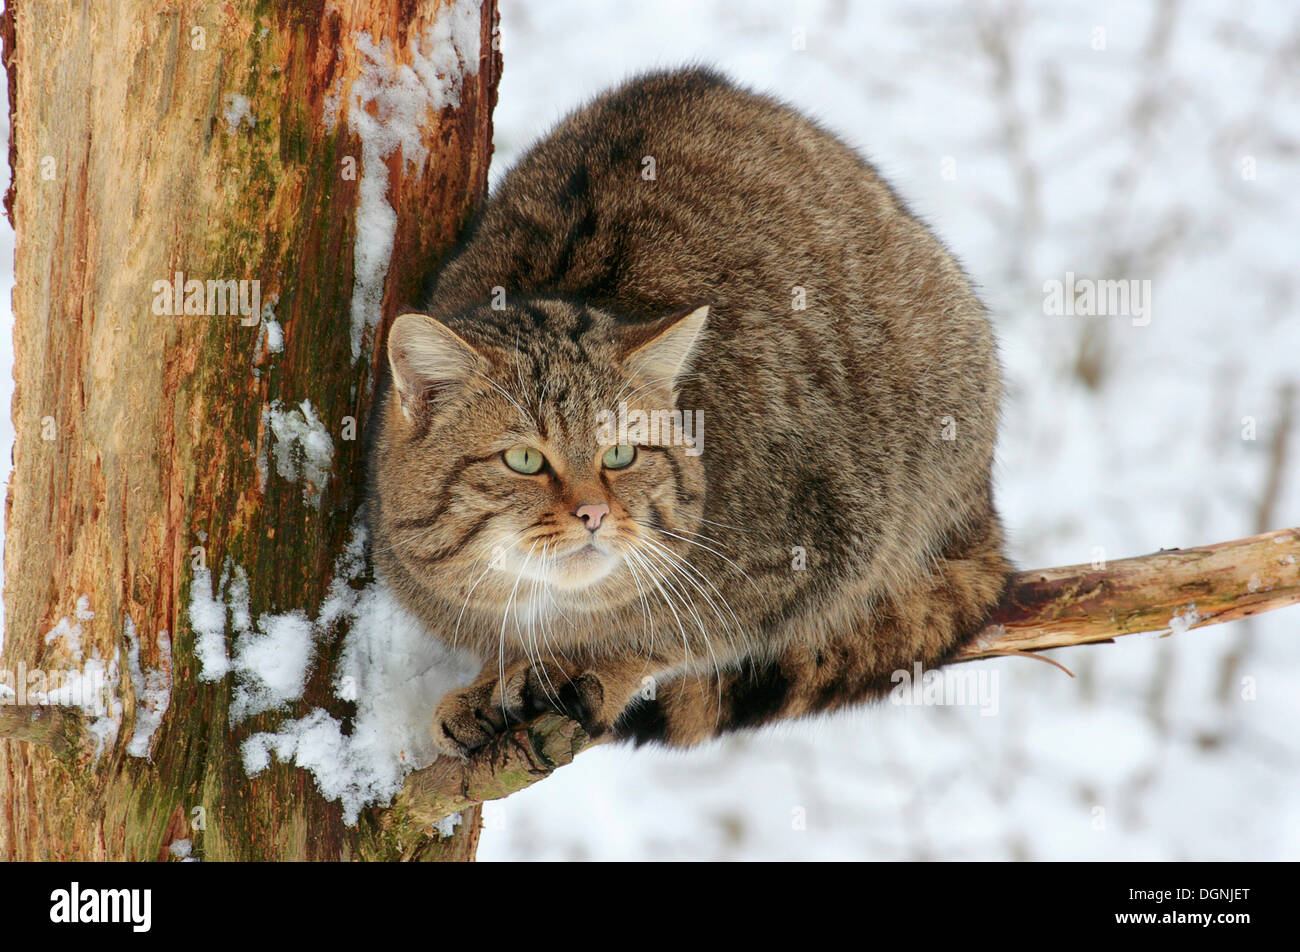 Wildcat (Felis silvestris), sitting in a tree Stock Photo